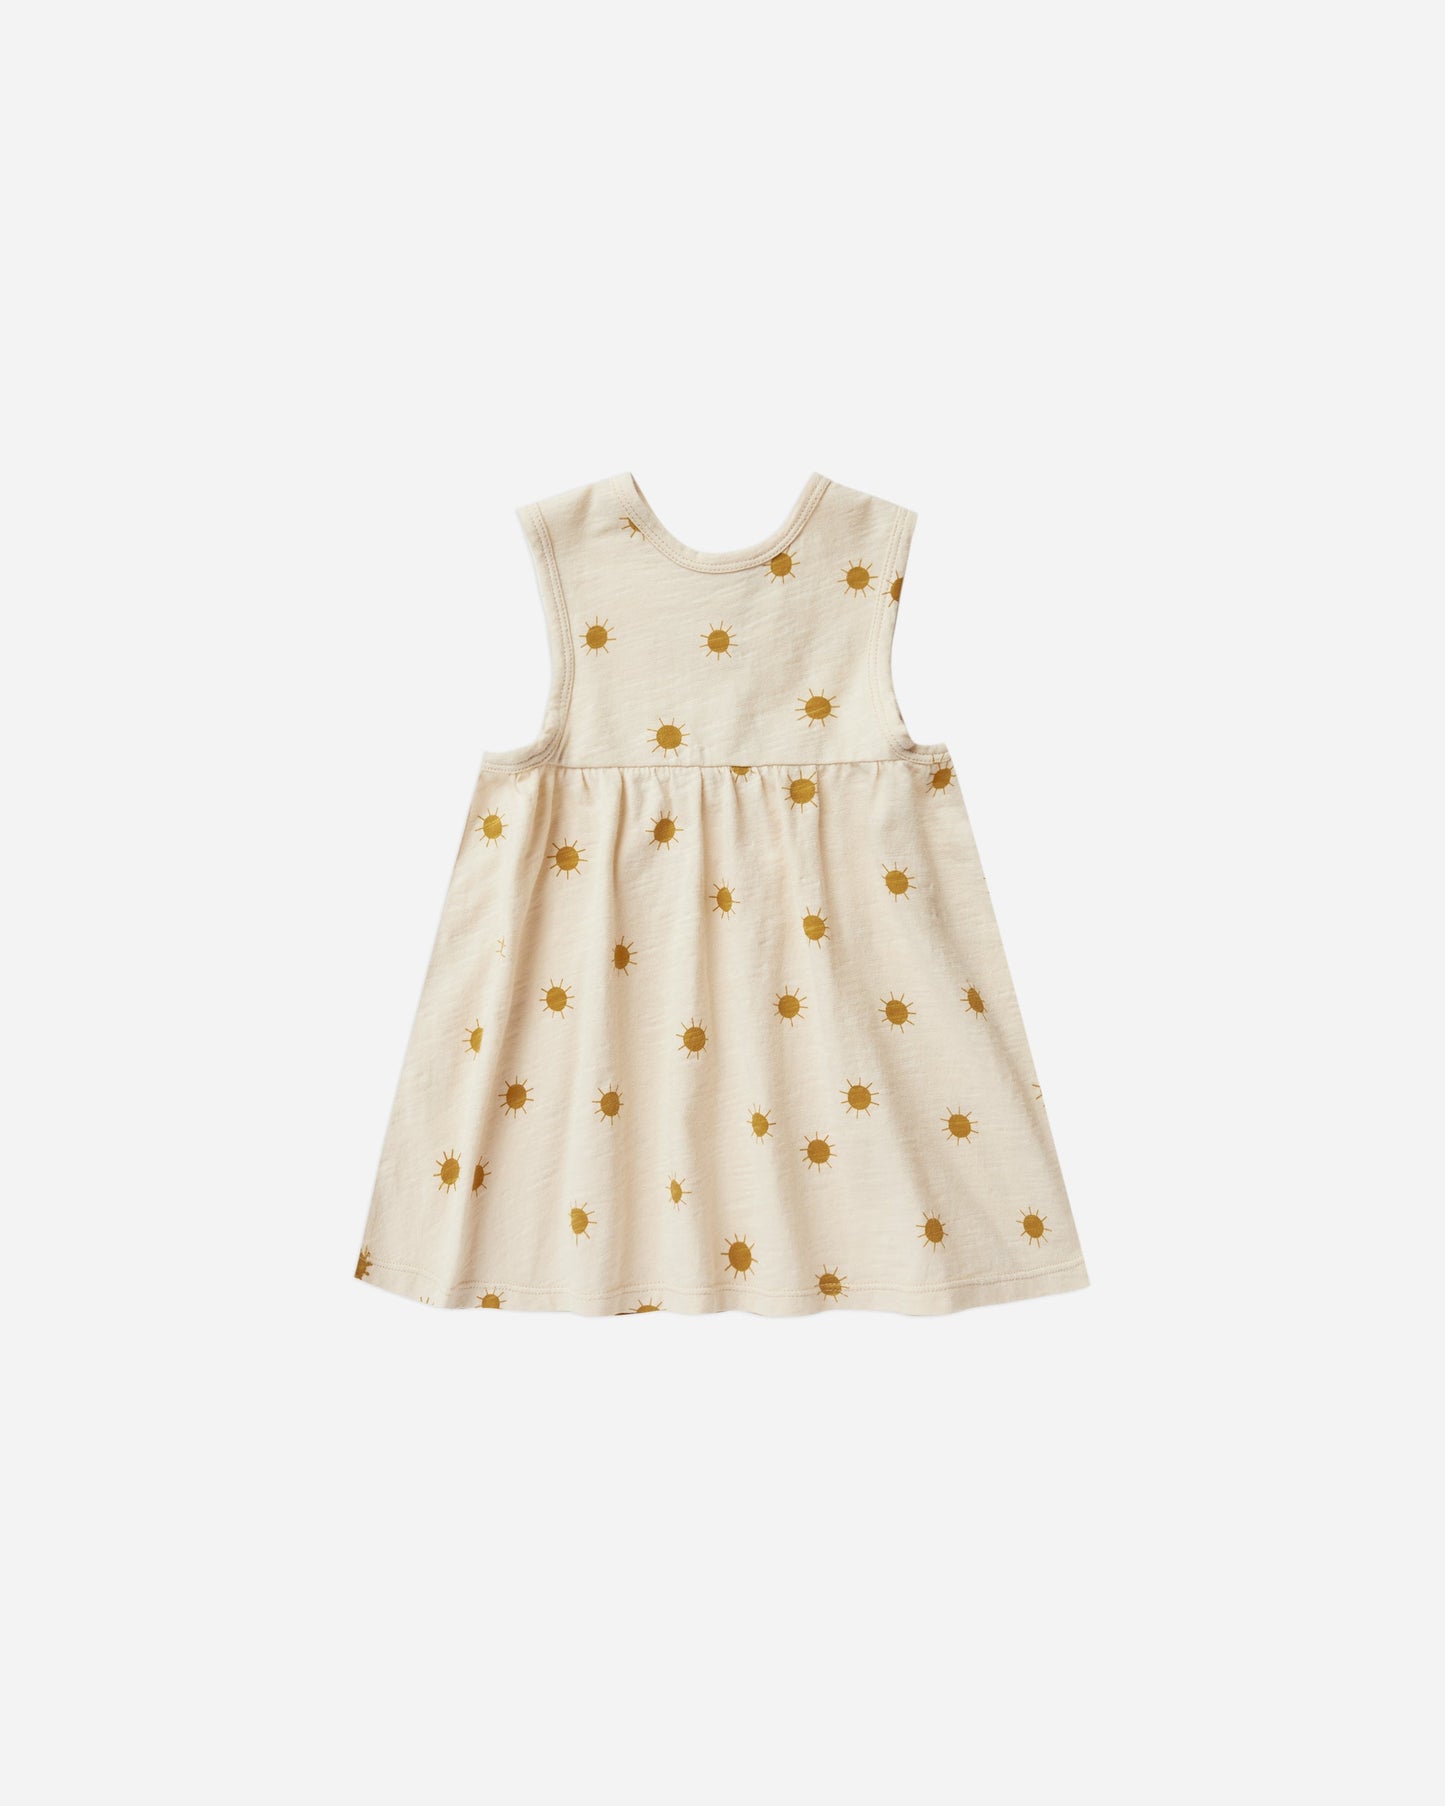 Layla Dress in Suns  - Doodlebug's Children's Boutique